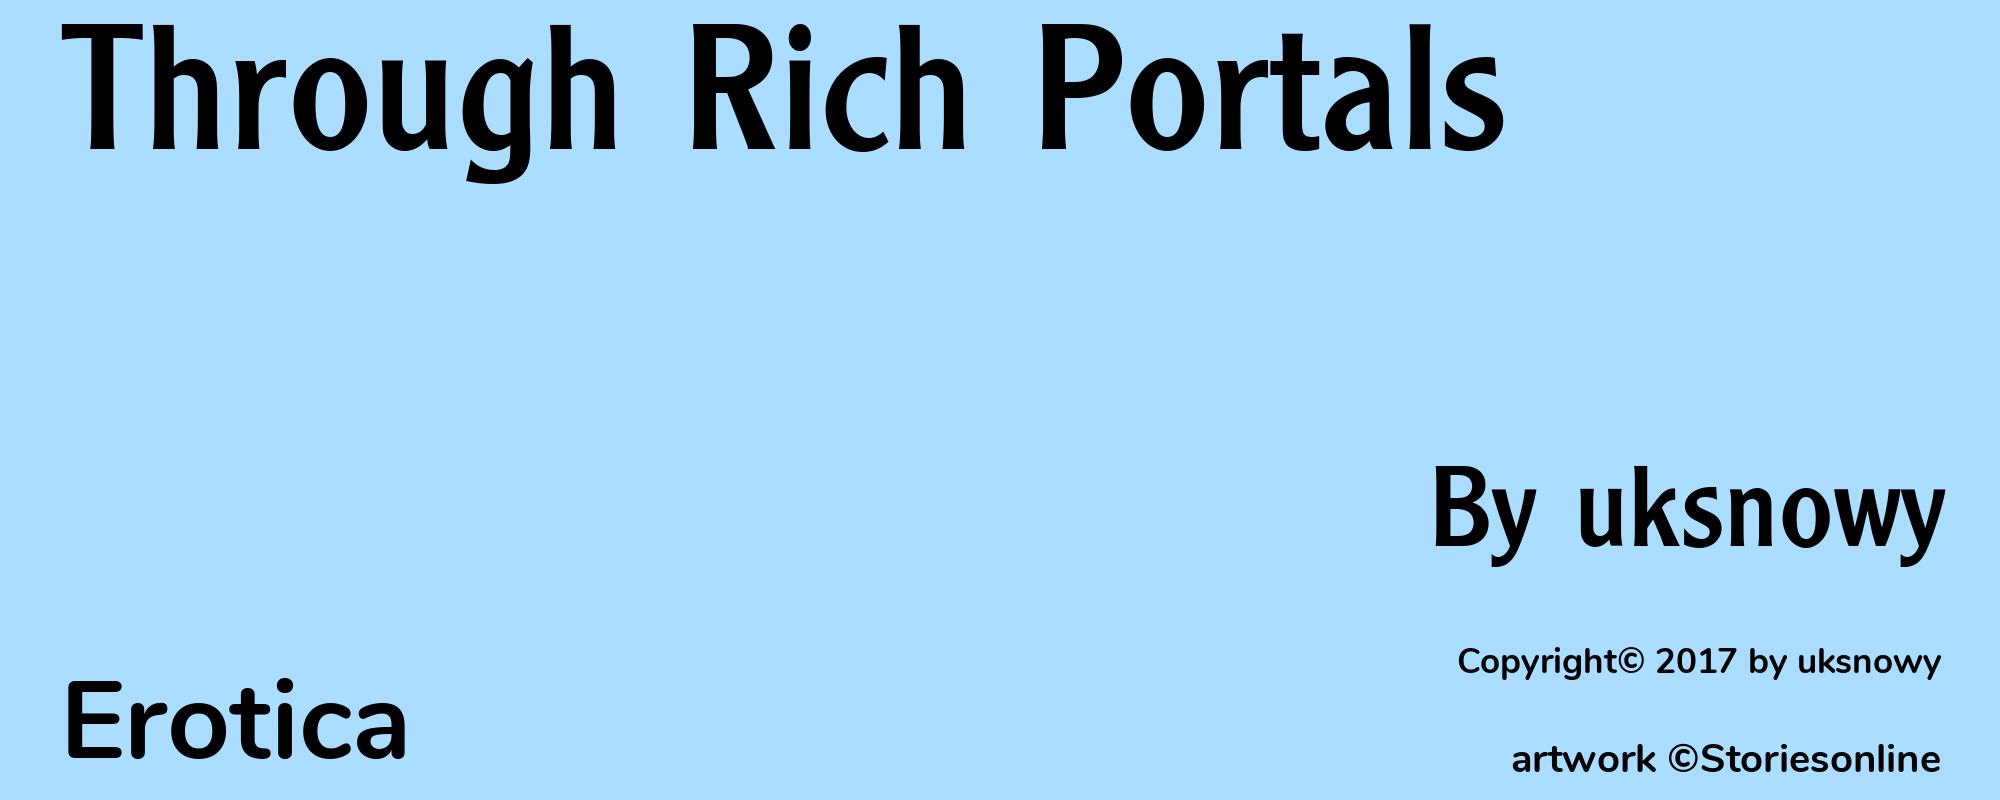 Through Rich Portals - Cover